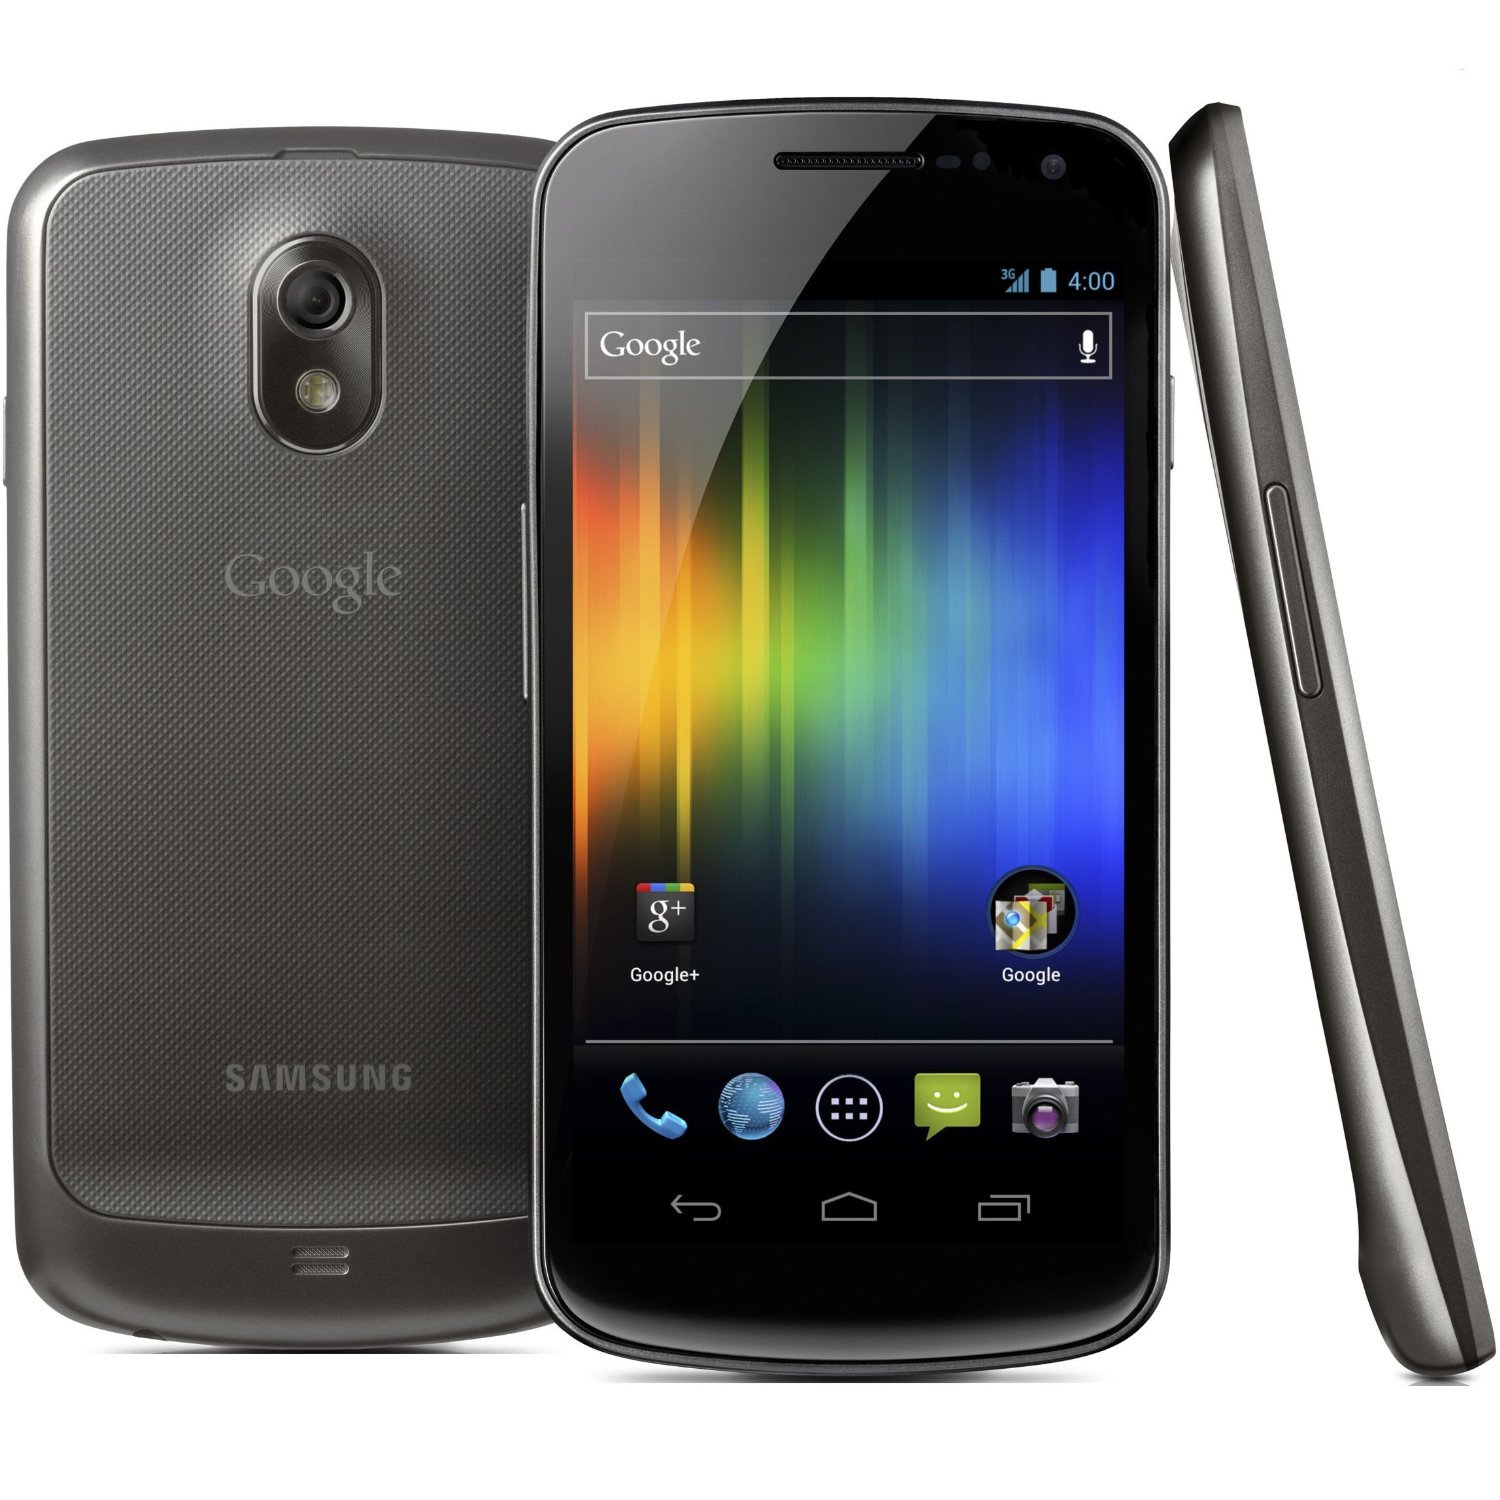 Samsung Galaxy Nexus I9250 specs, review, release date - PhonesData